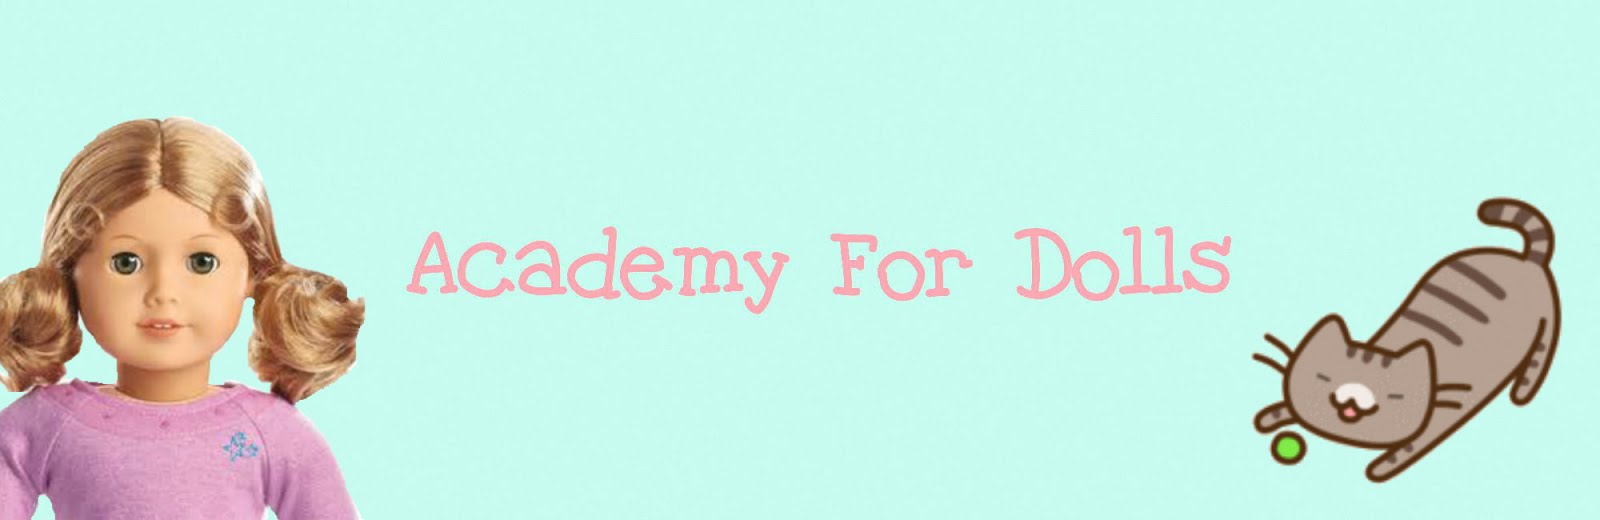 Academy For Dolls